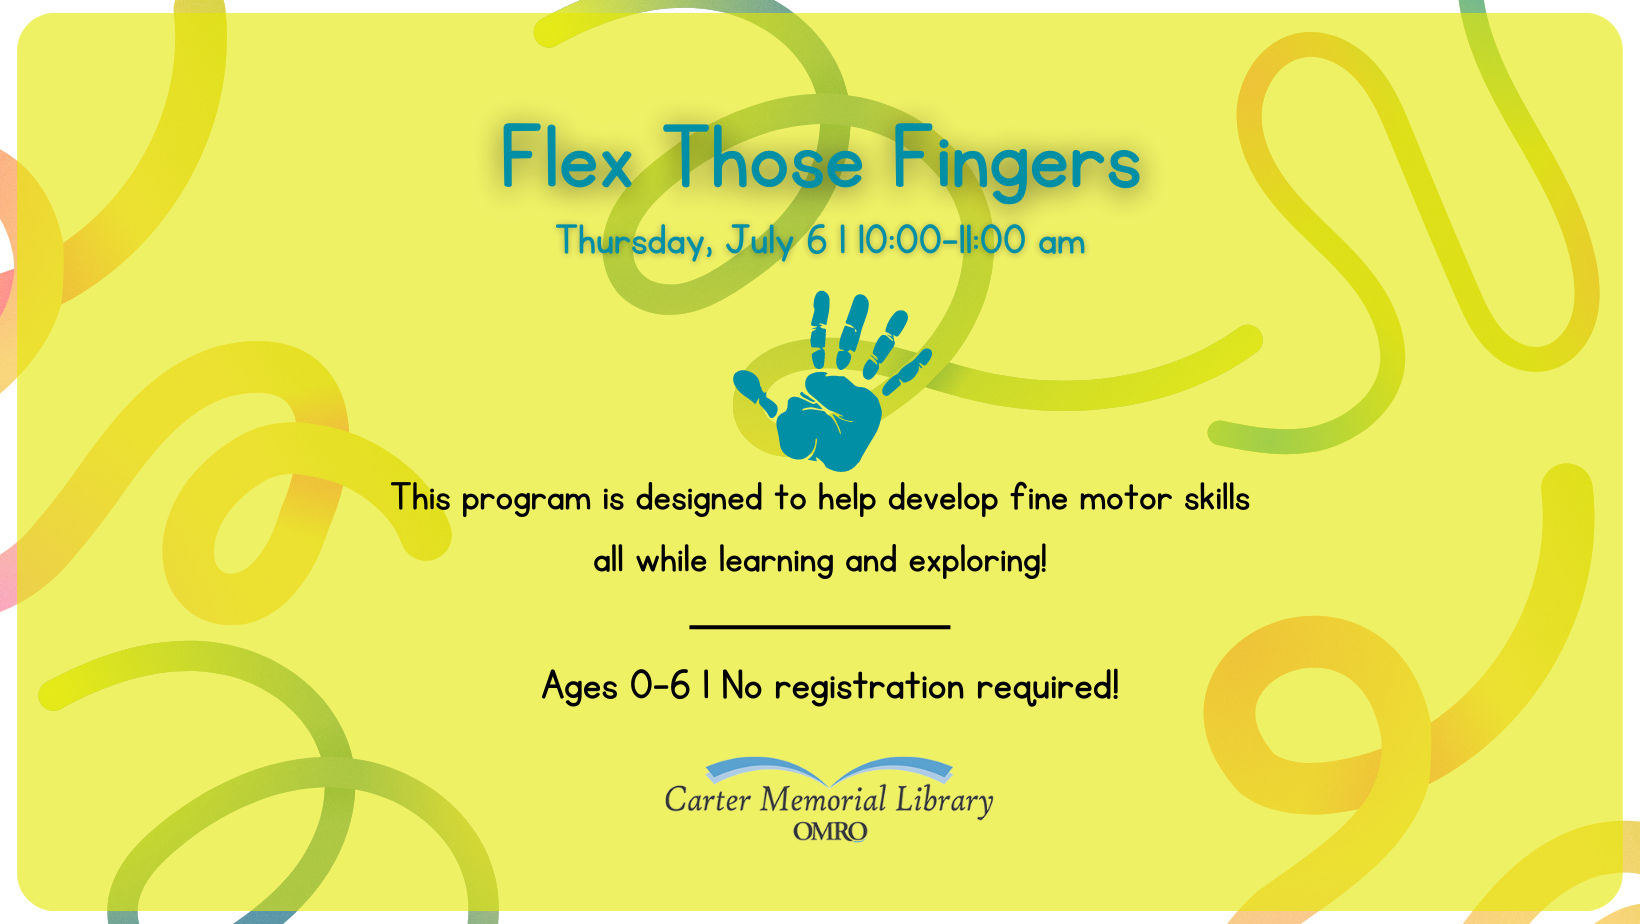 Flex Those Fingers poster